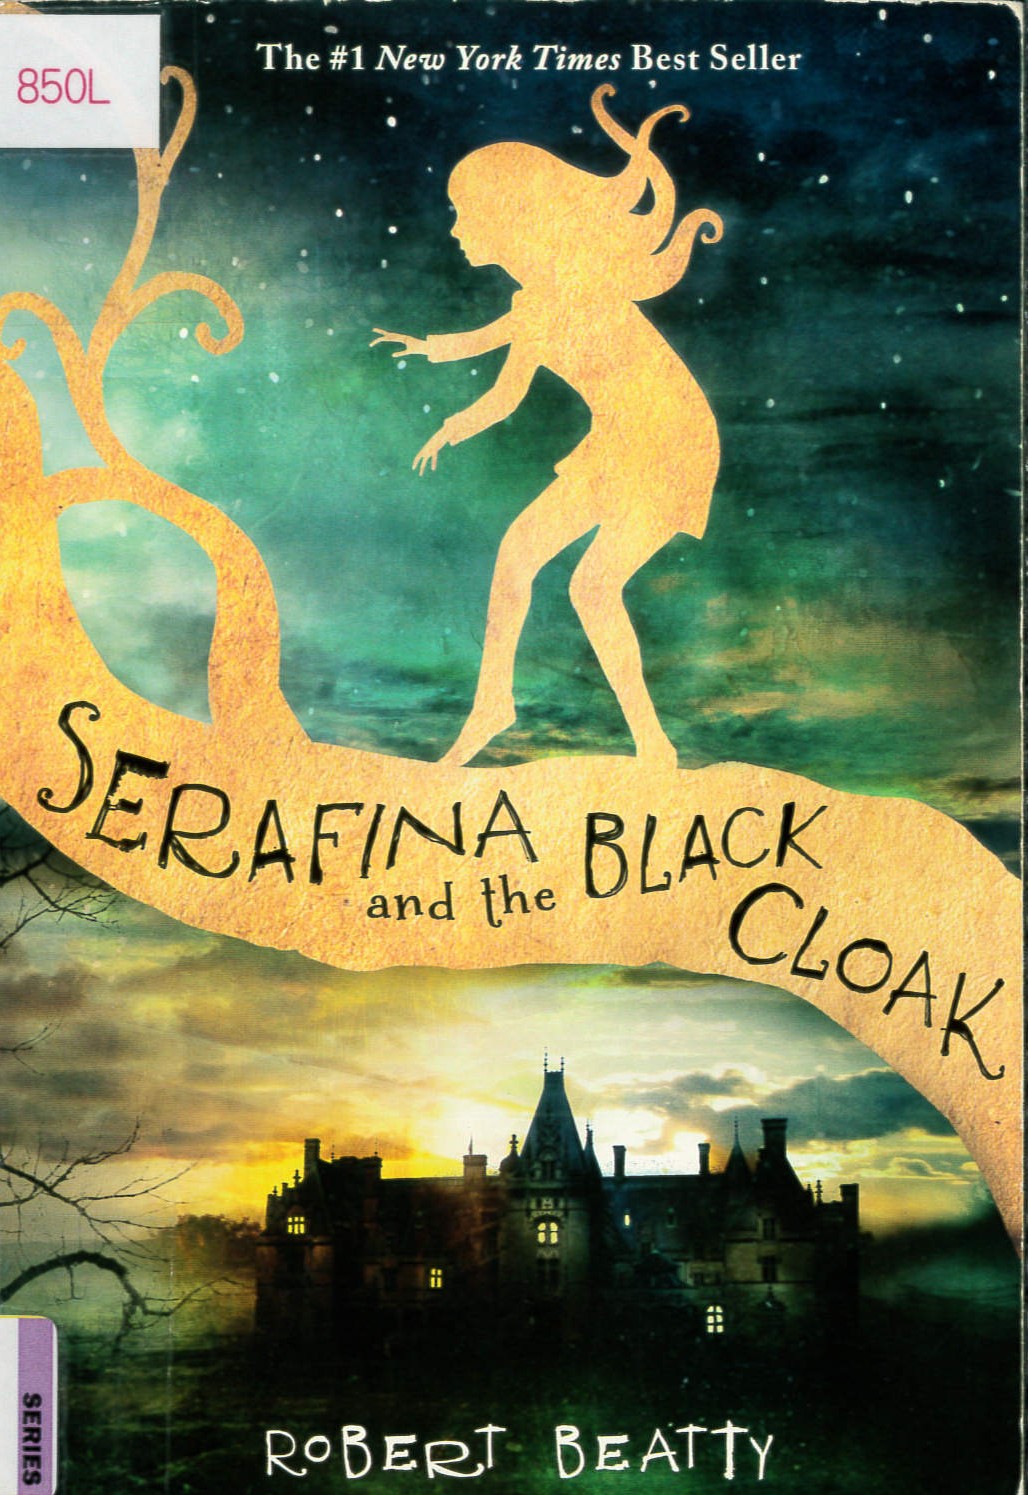 Serafina and the black cloak /